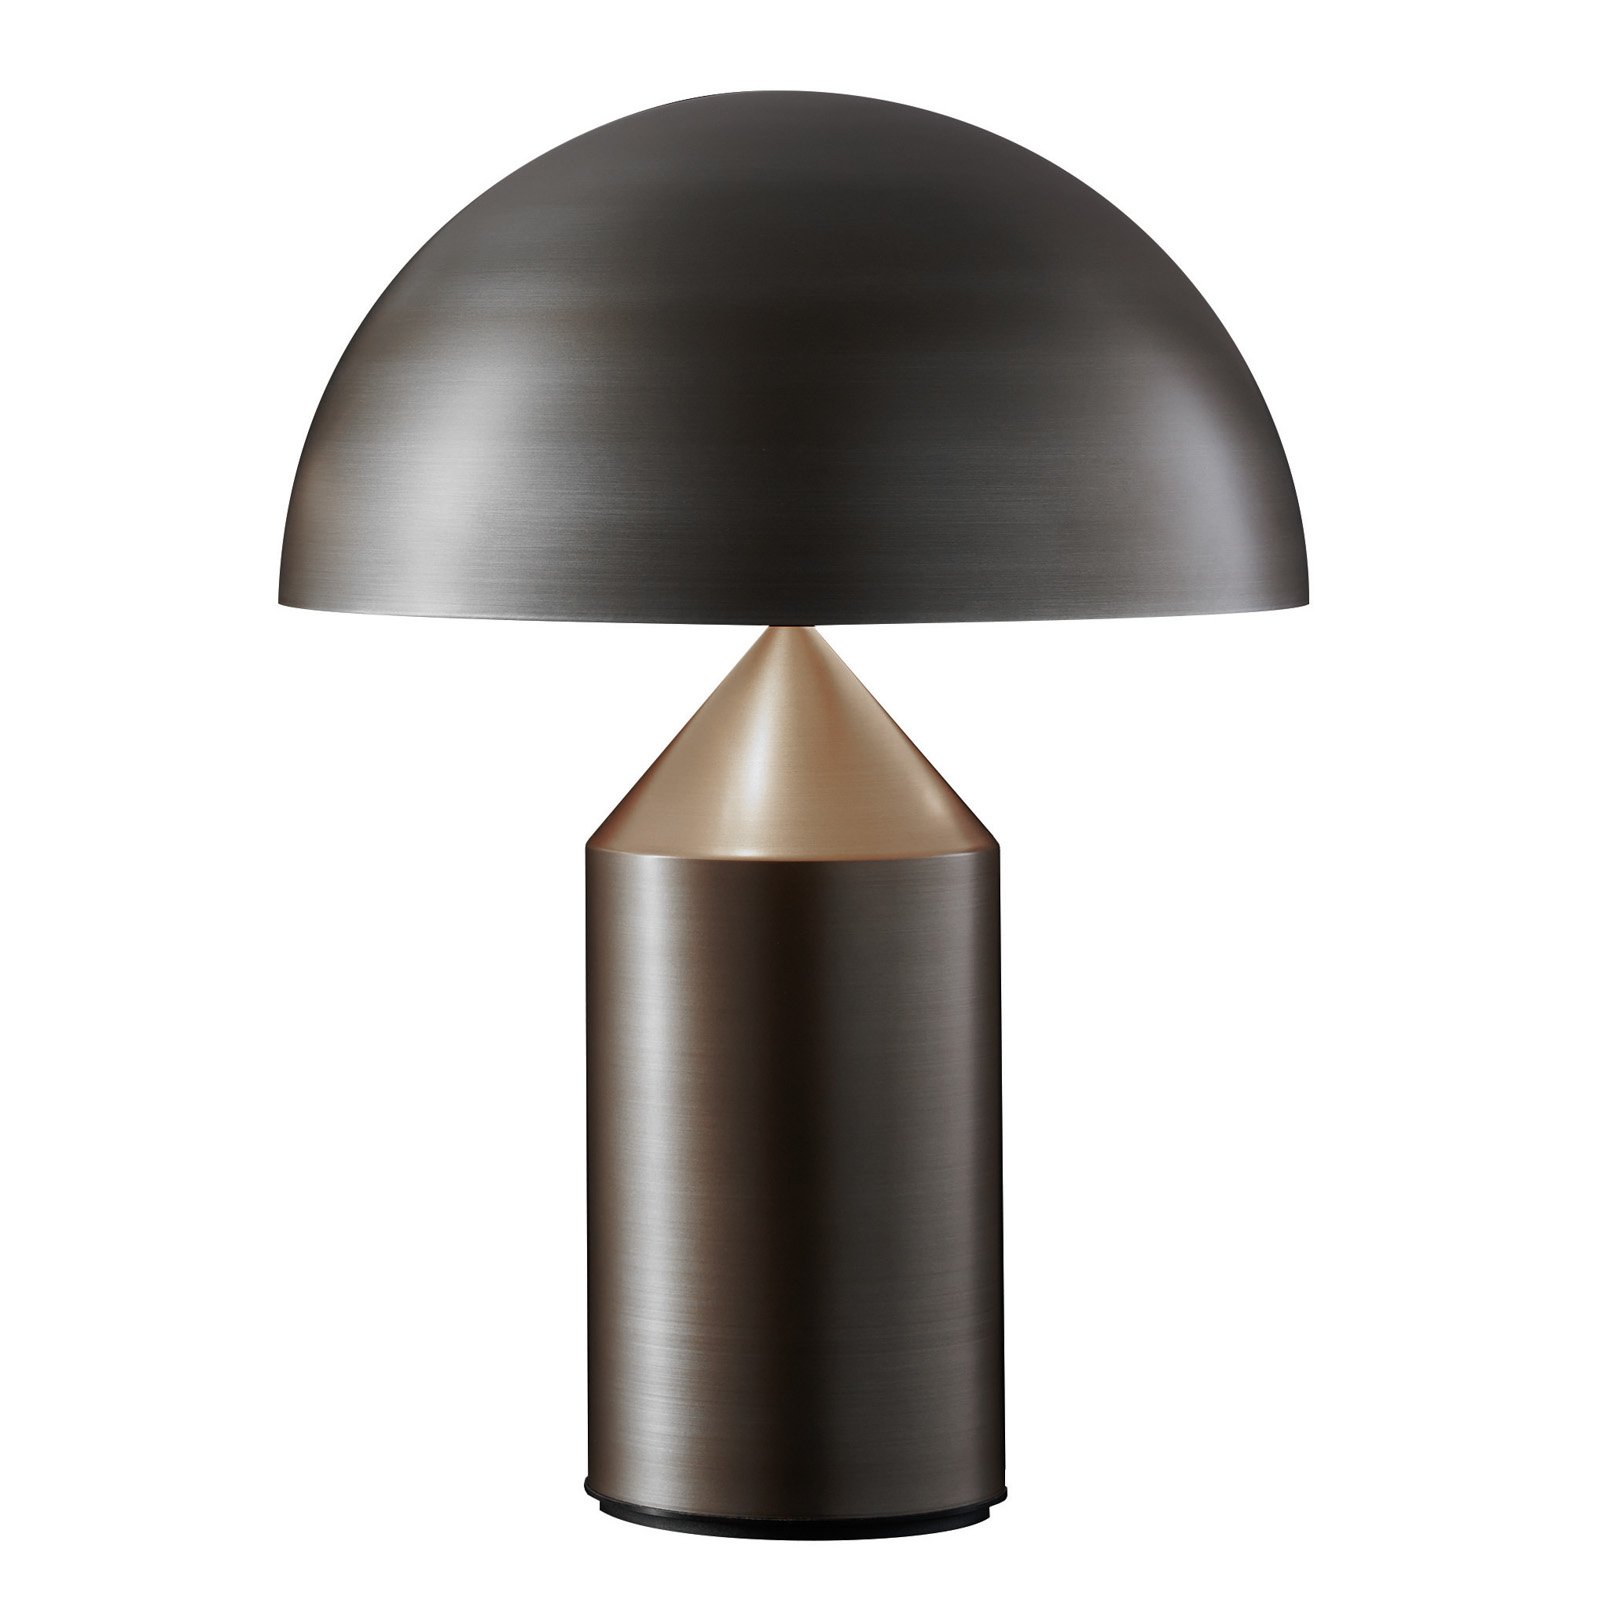 Oluce Atollo lampe à poser, dimmable Ø38cm, bronze